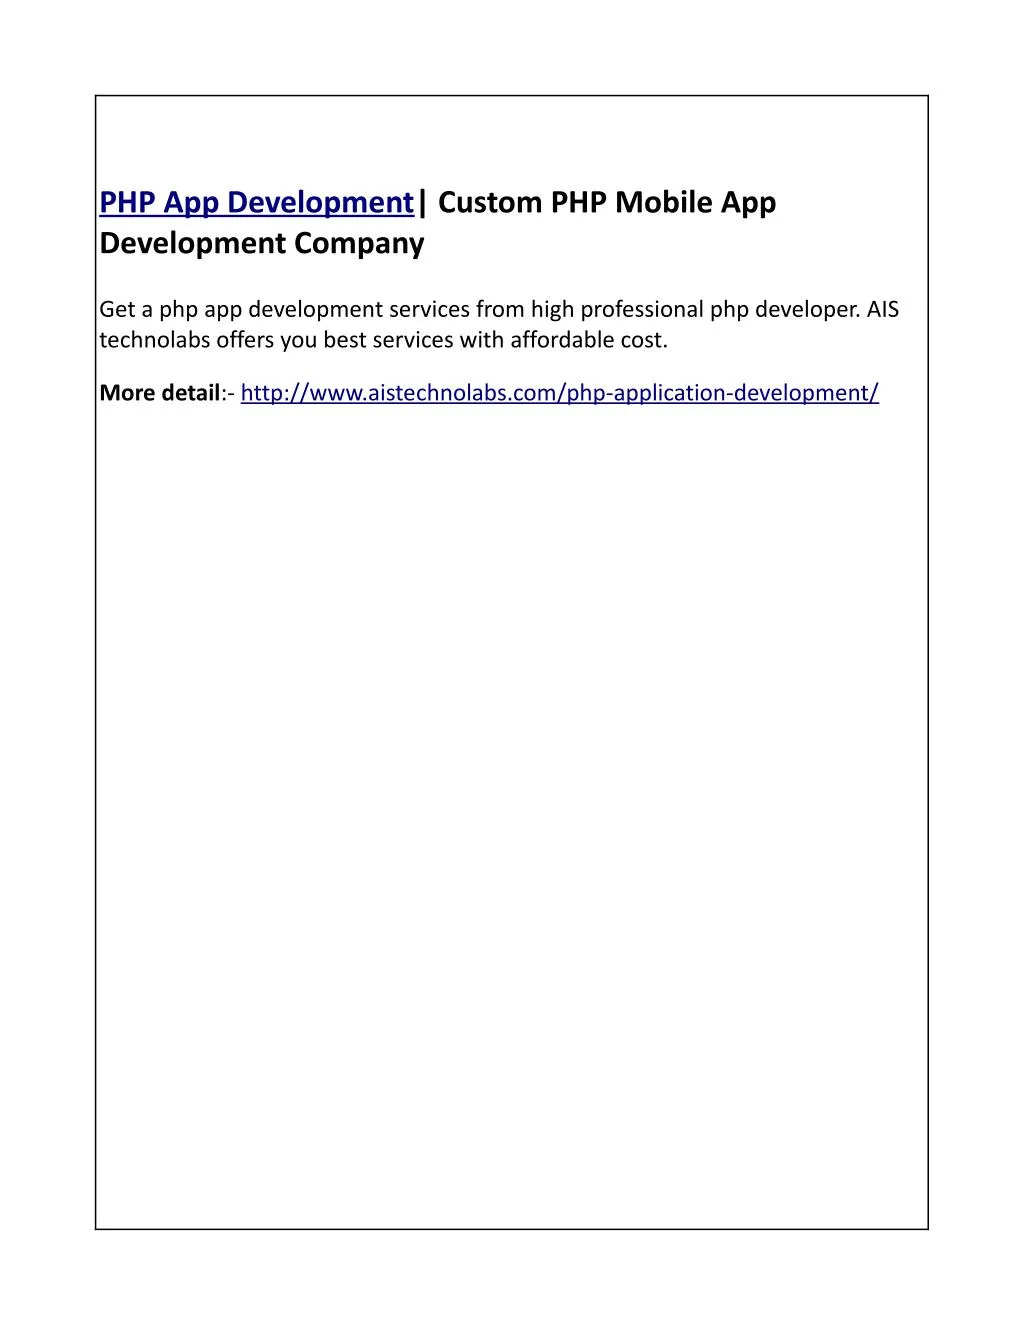 php app development custom php mobile